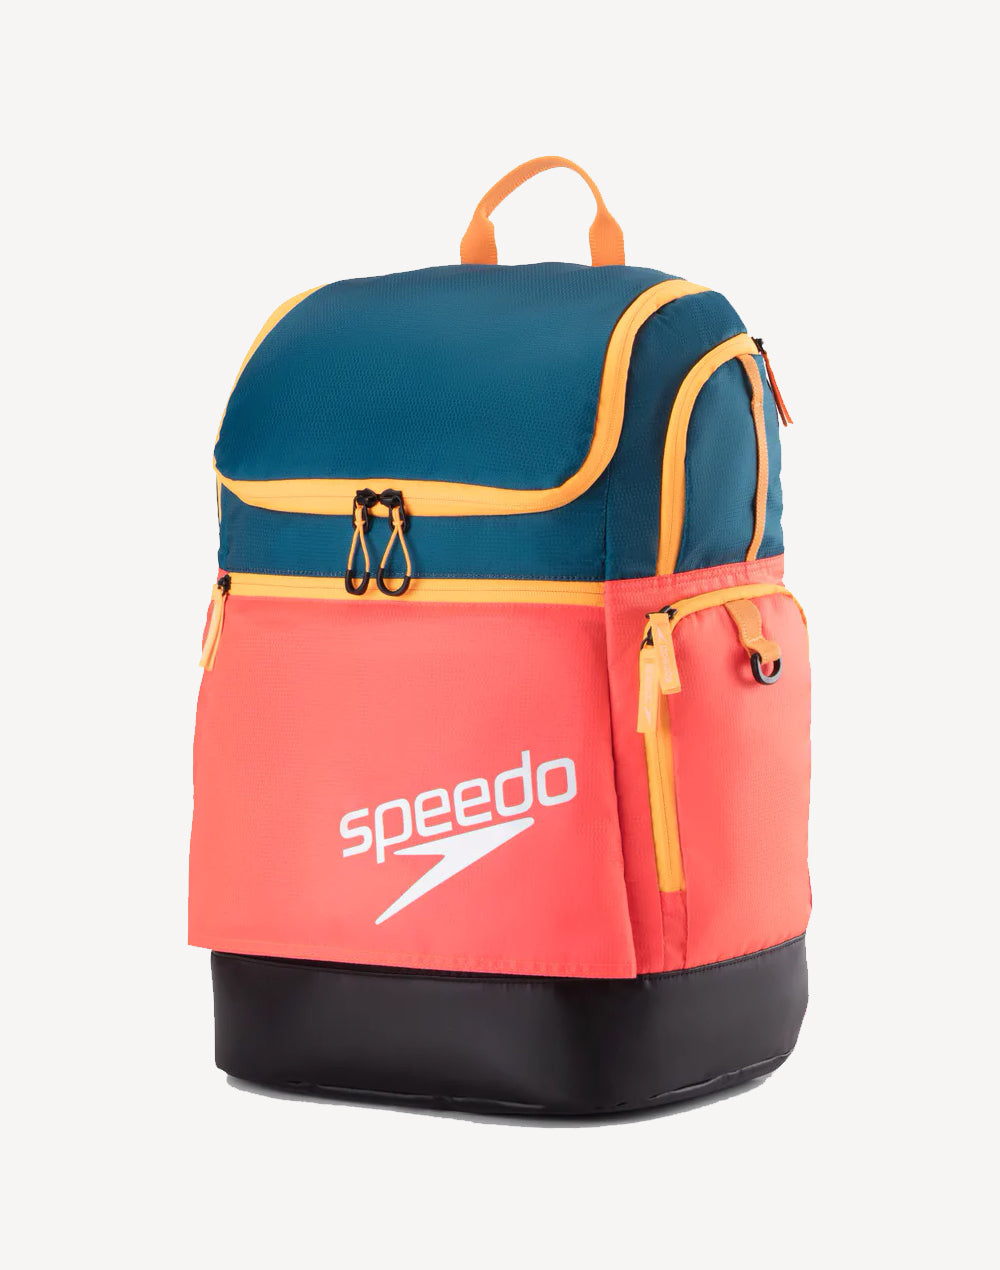 Teamster 2.0 Backpack#color_coral